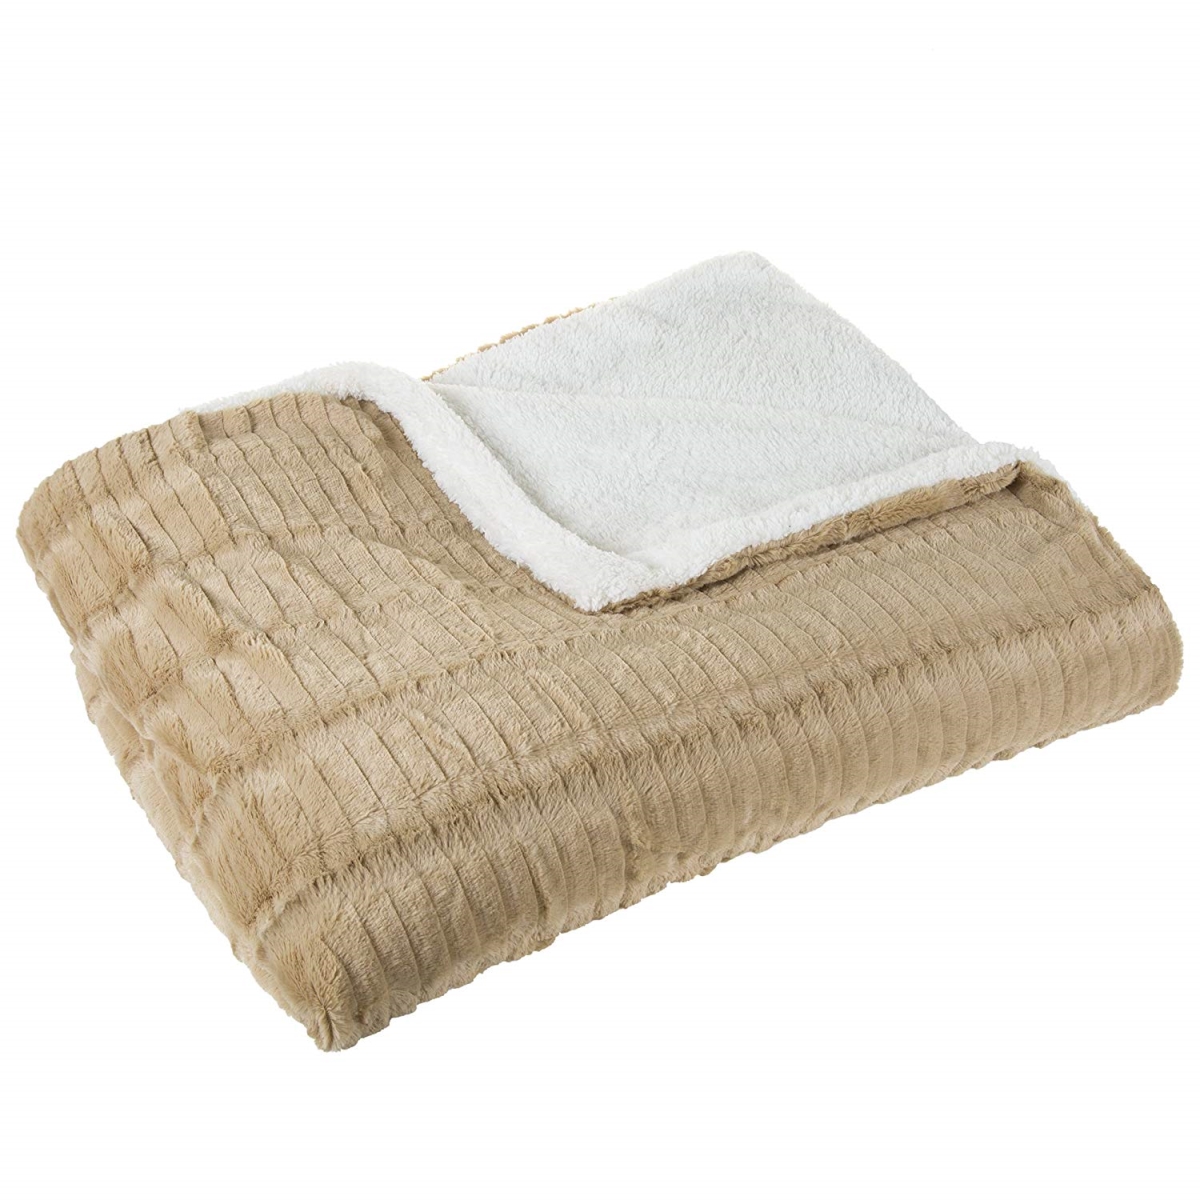 61a-01114 Fleece & Sherpa Blanket, King Size - Taupe